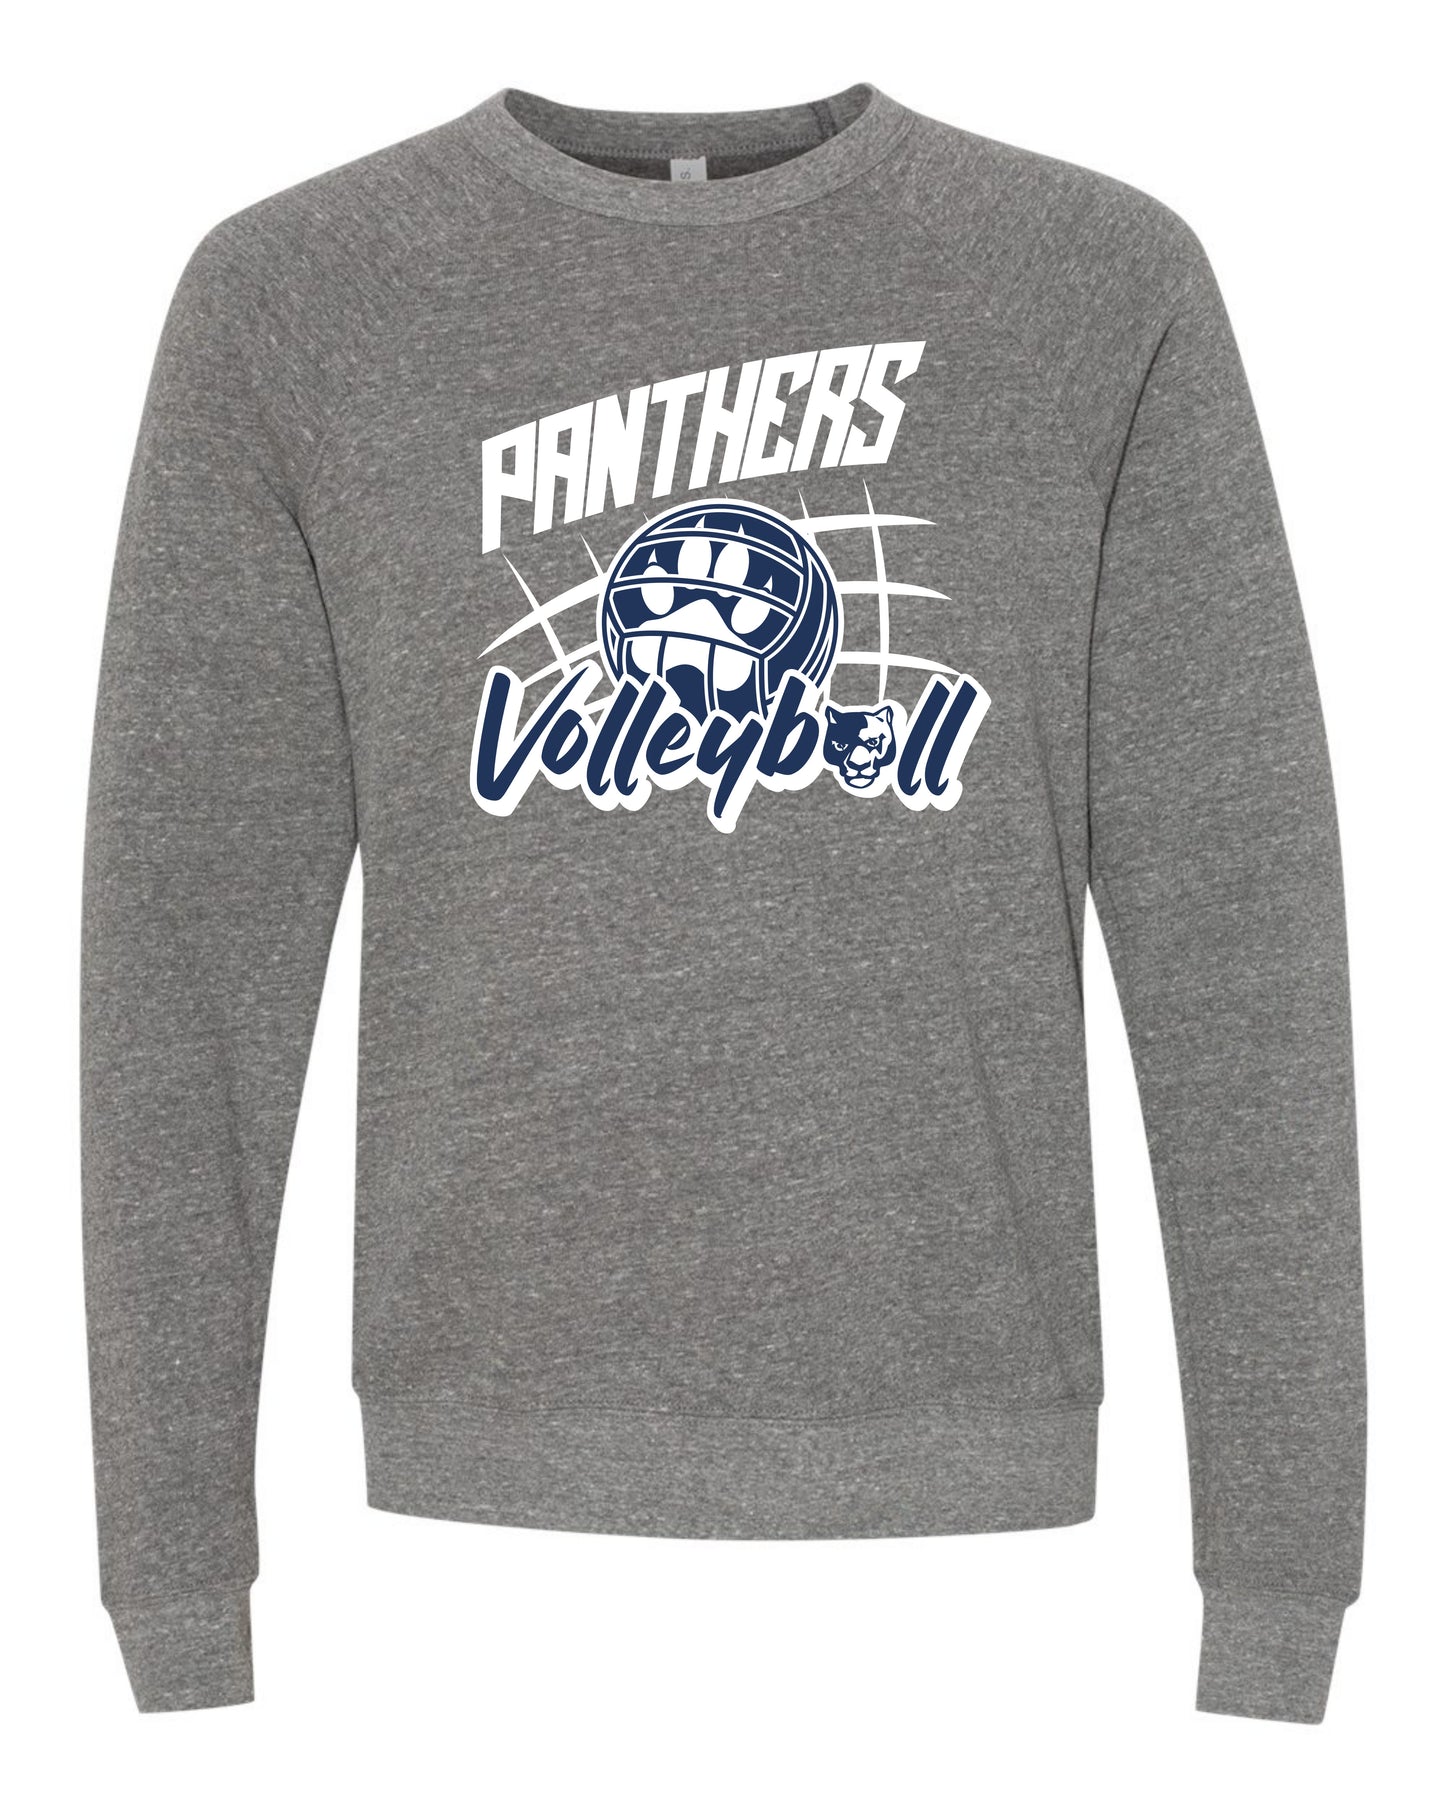 Panthers Volleyball Paw Ball- Youth Sweatshirt